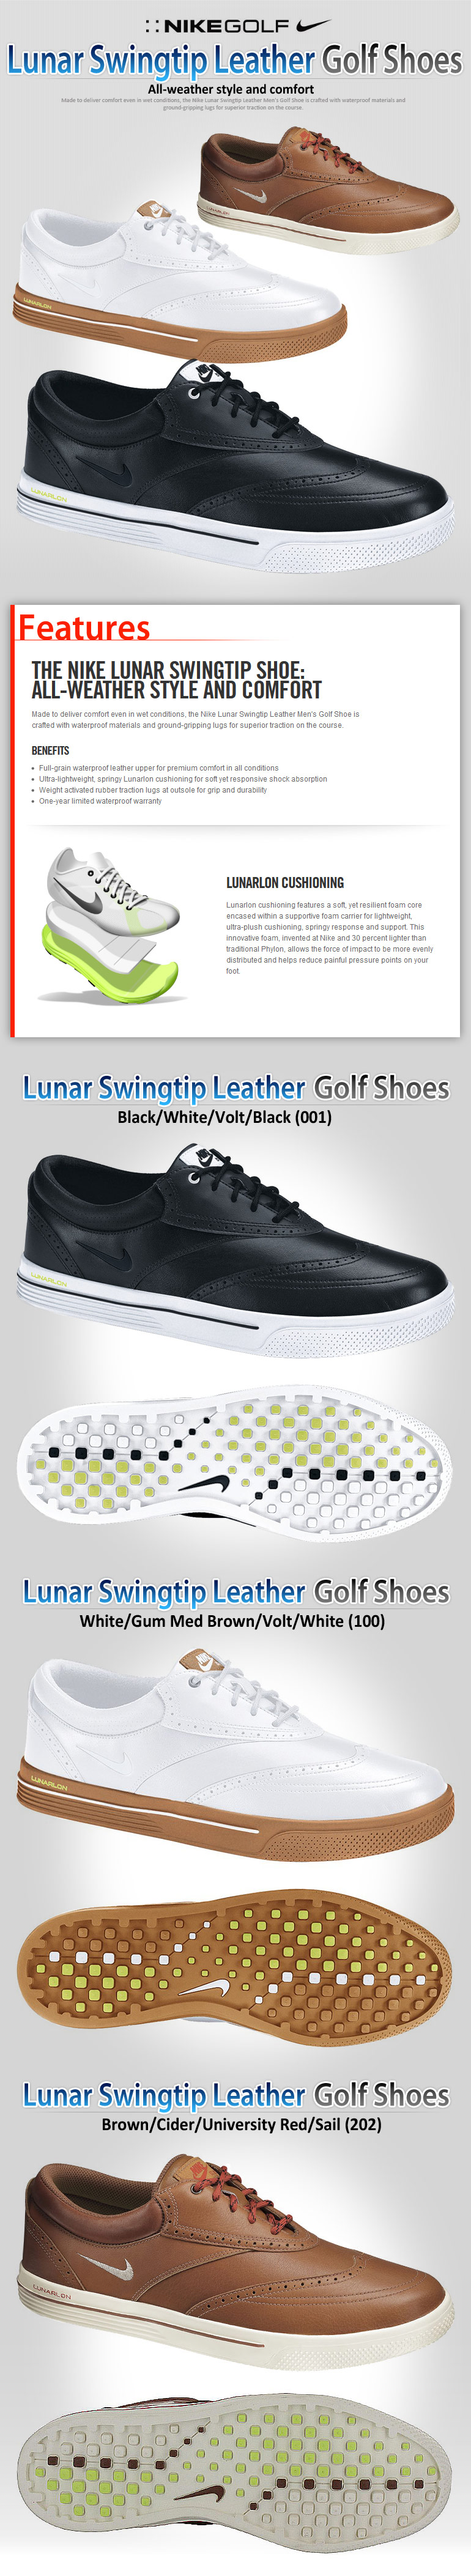 nike lunar swingtip golf shoes